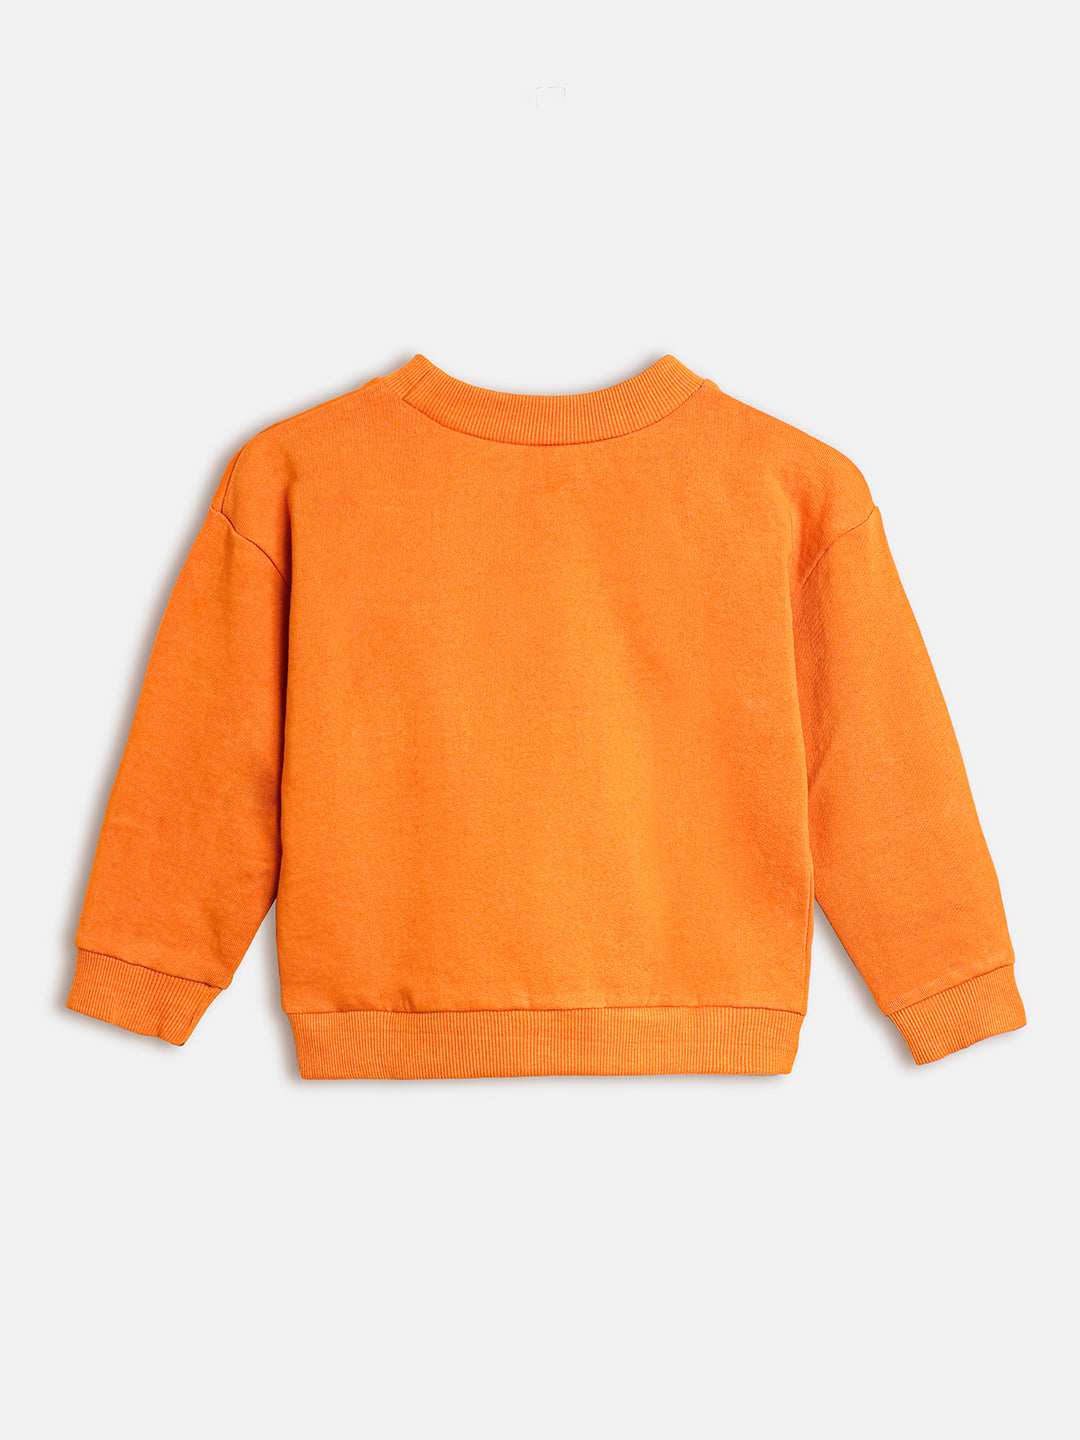 Checkboard Faces Dungaree with Orange Sweatshirt